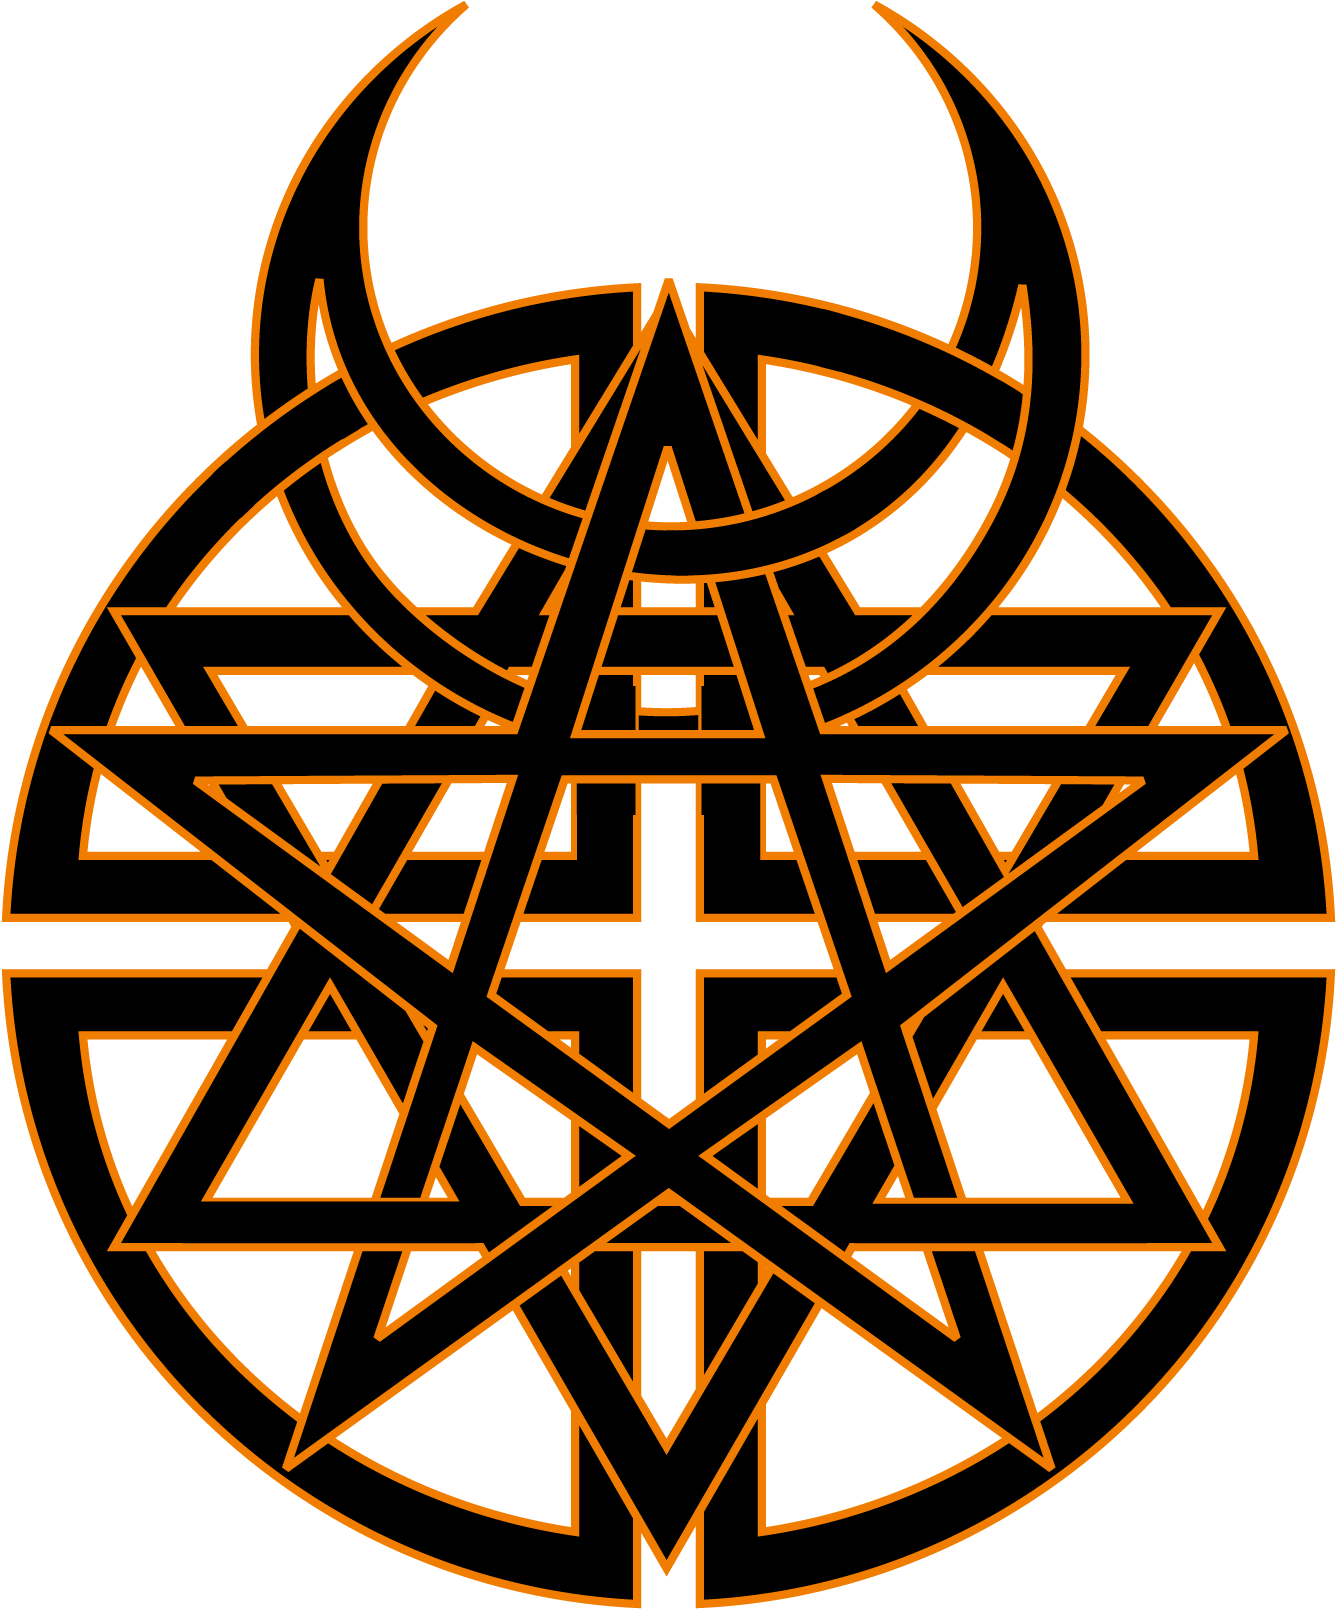 Пентакль картинка. Дистурбед лого. Пентаграмма дьявола со знаками. Знаки сатанинские пентаграммы. Пентаграмма символ сатанизма.